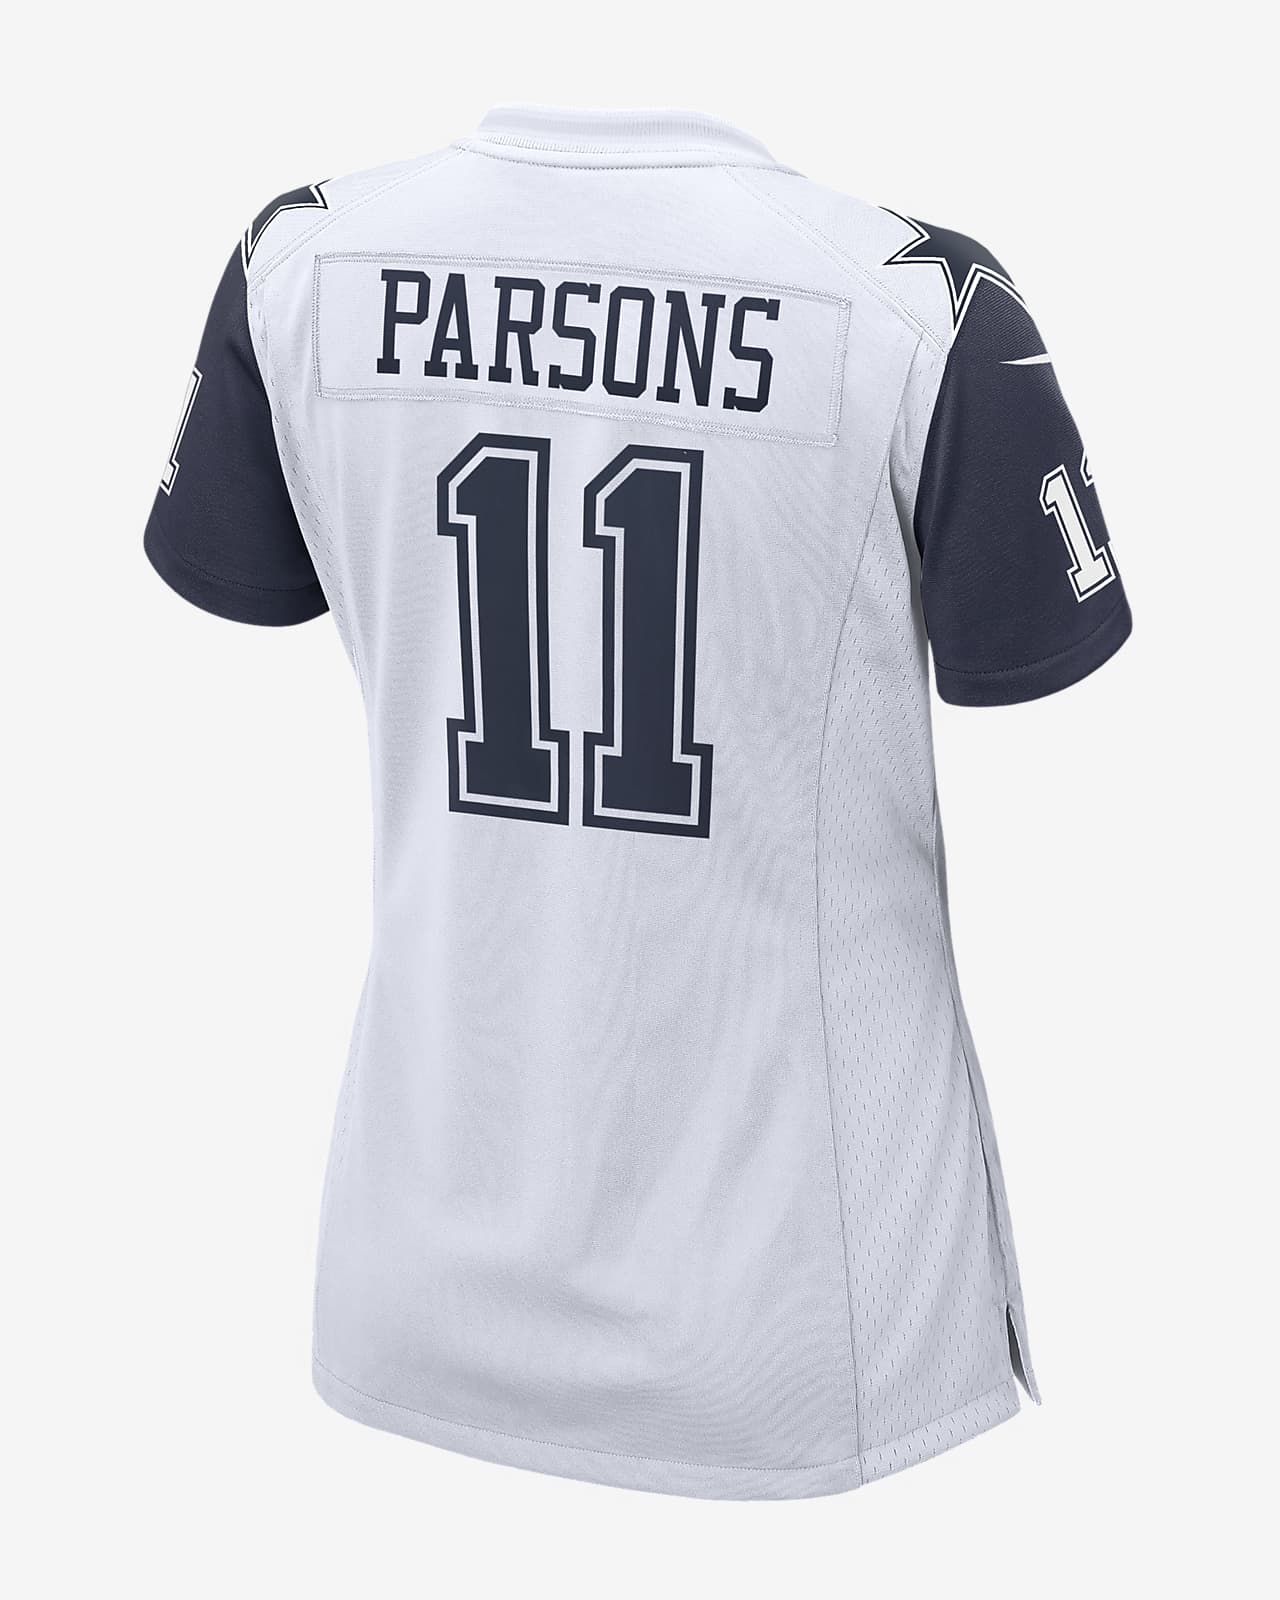 Women's Nike Micah Parsons White Dallas Cowboys Alternate Game Jersey Size: Small